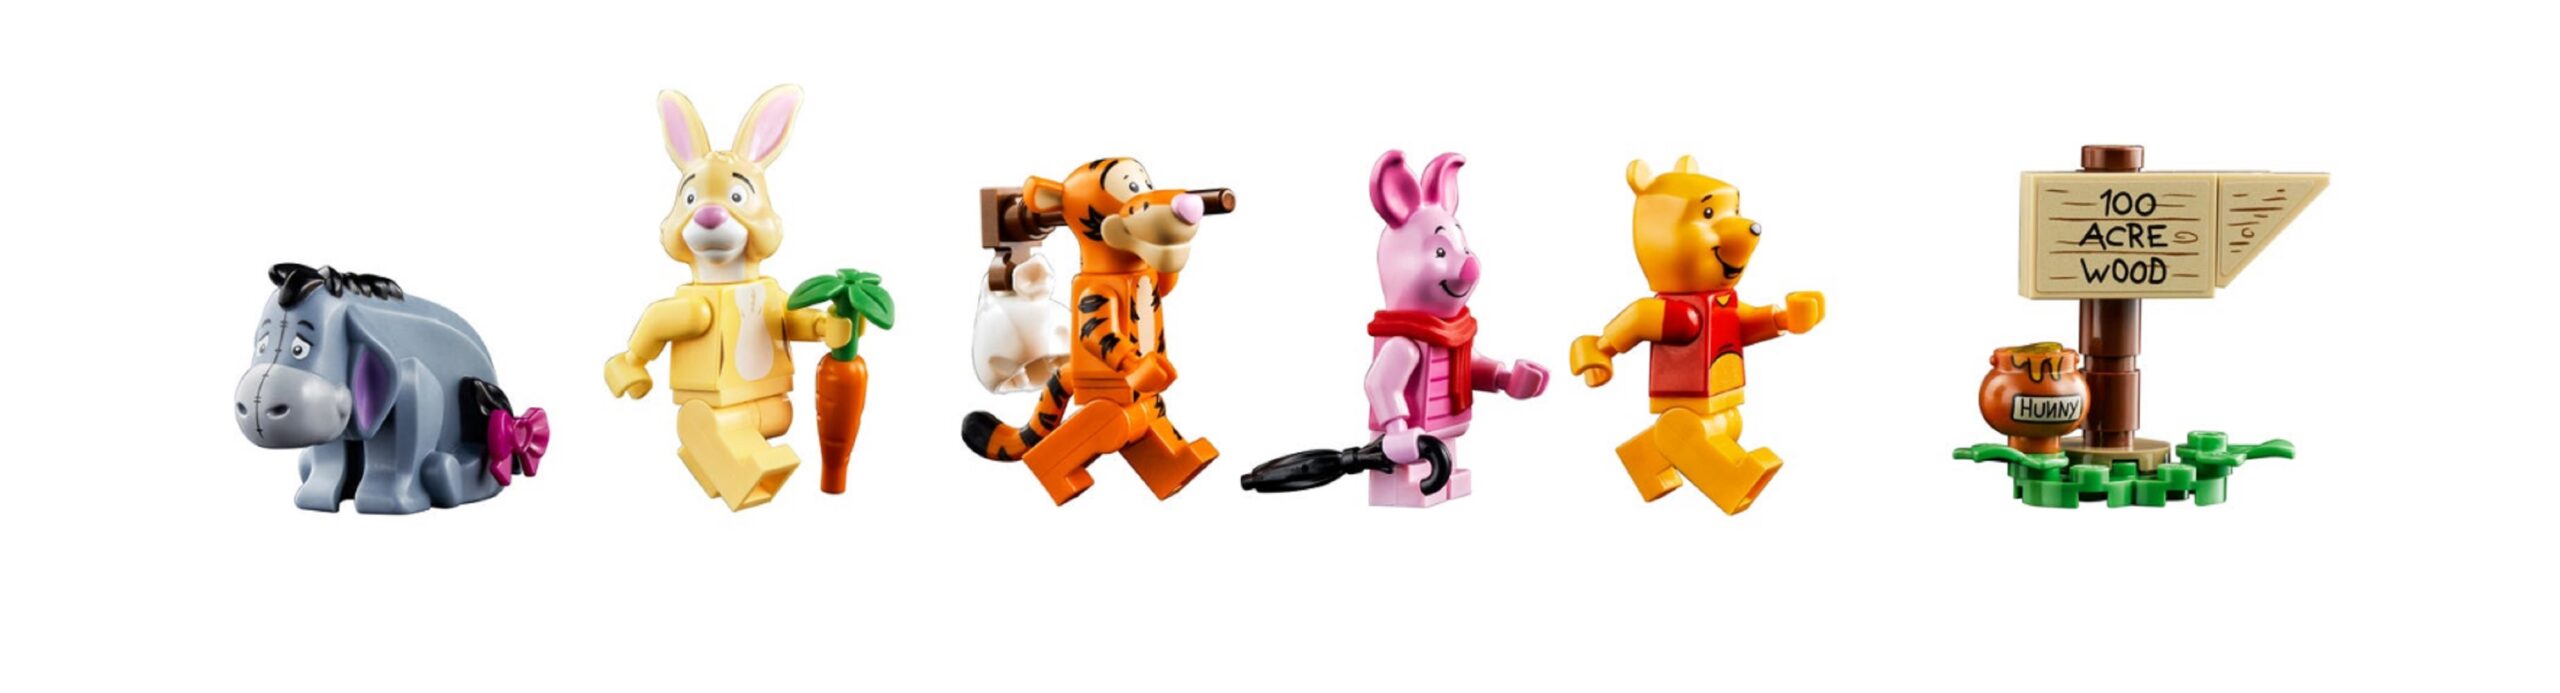 Winnie The Pooh LEGO, minifigures